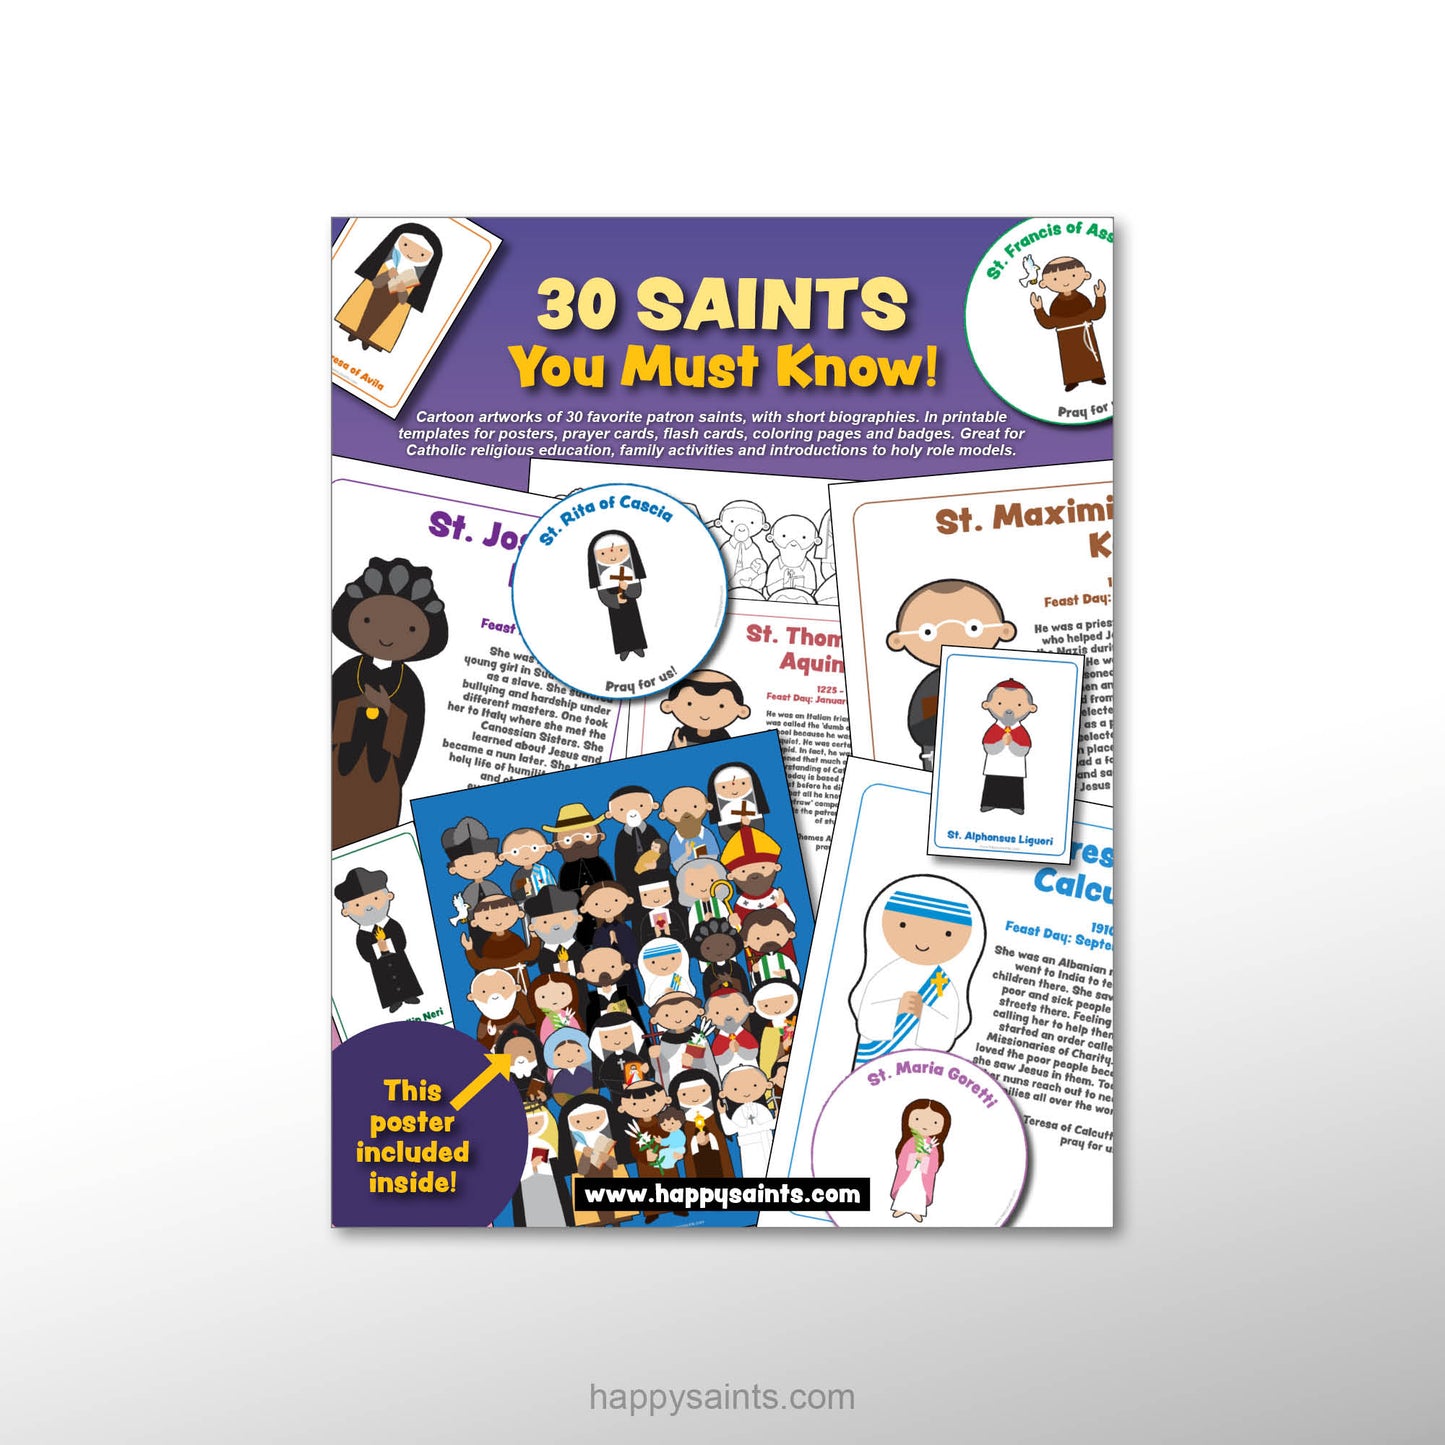 30 Saints You Must Know!